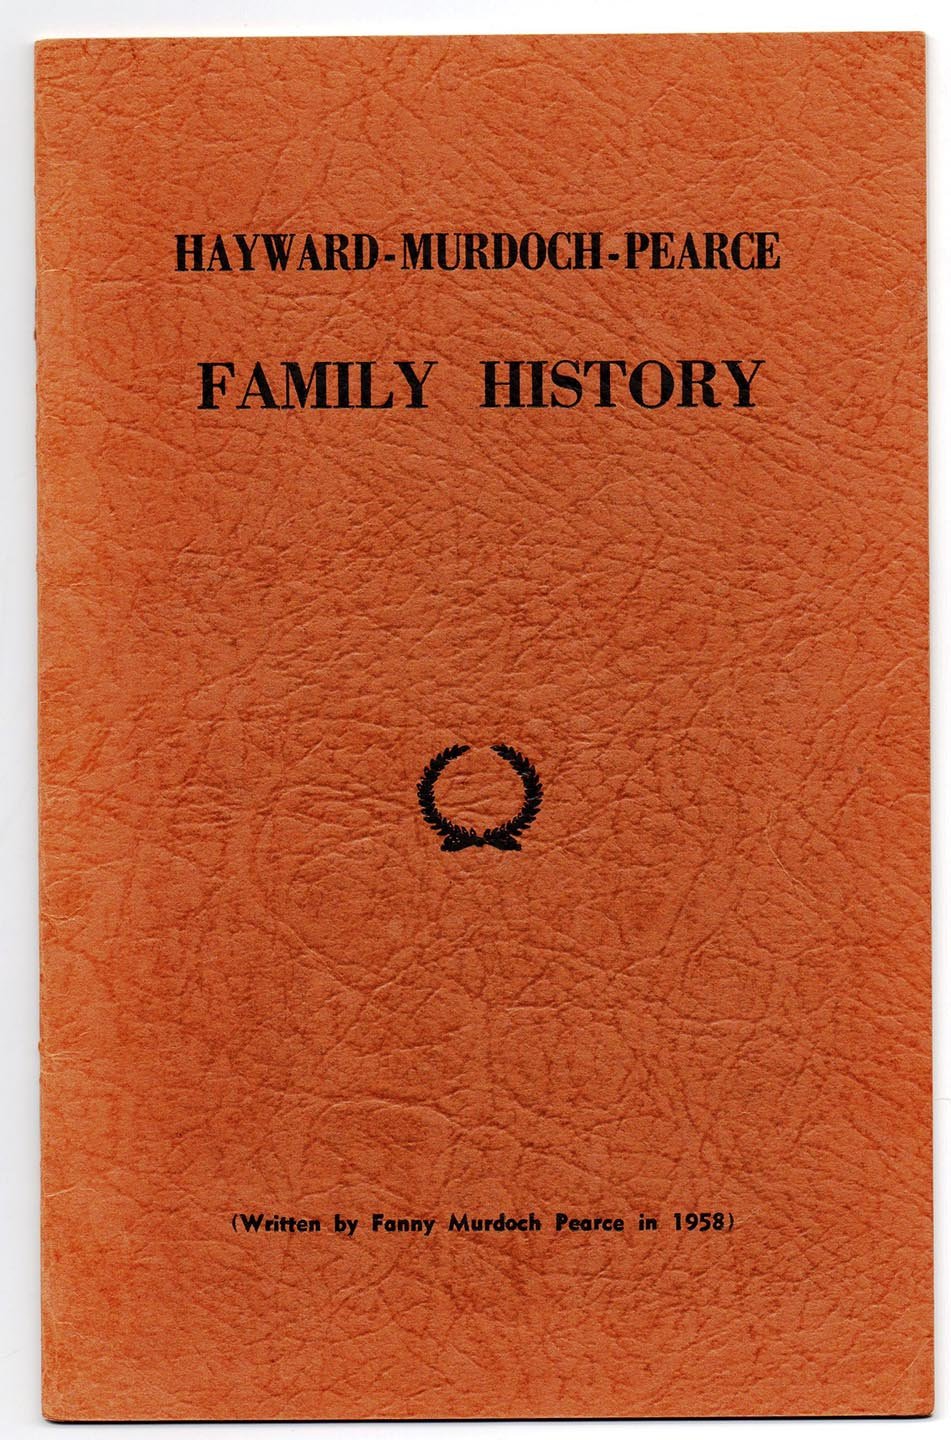 Hayward-Murdoch-Pearce Family History